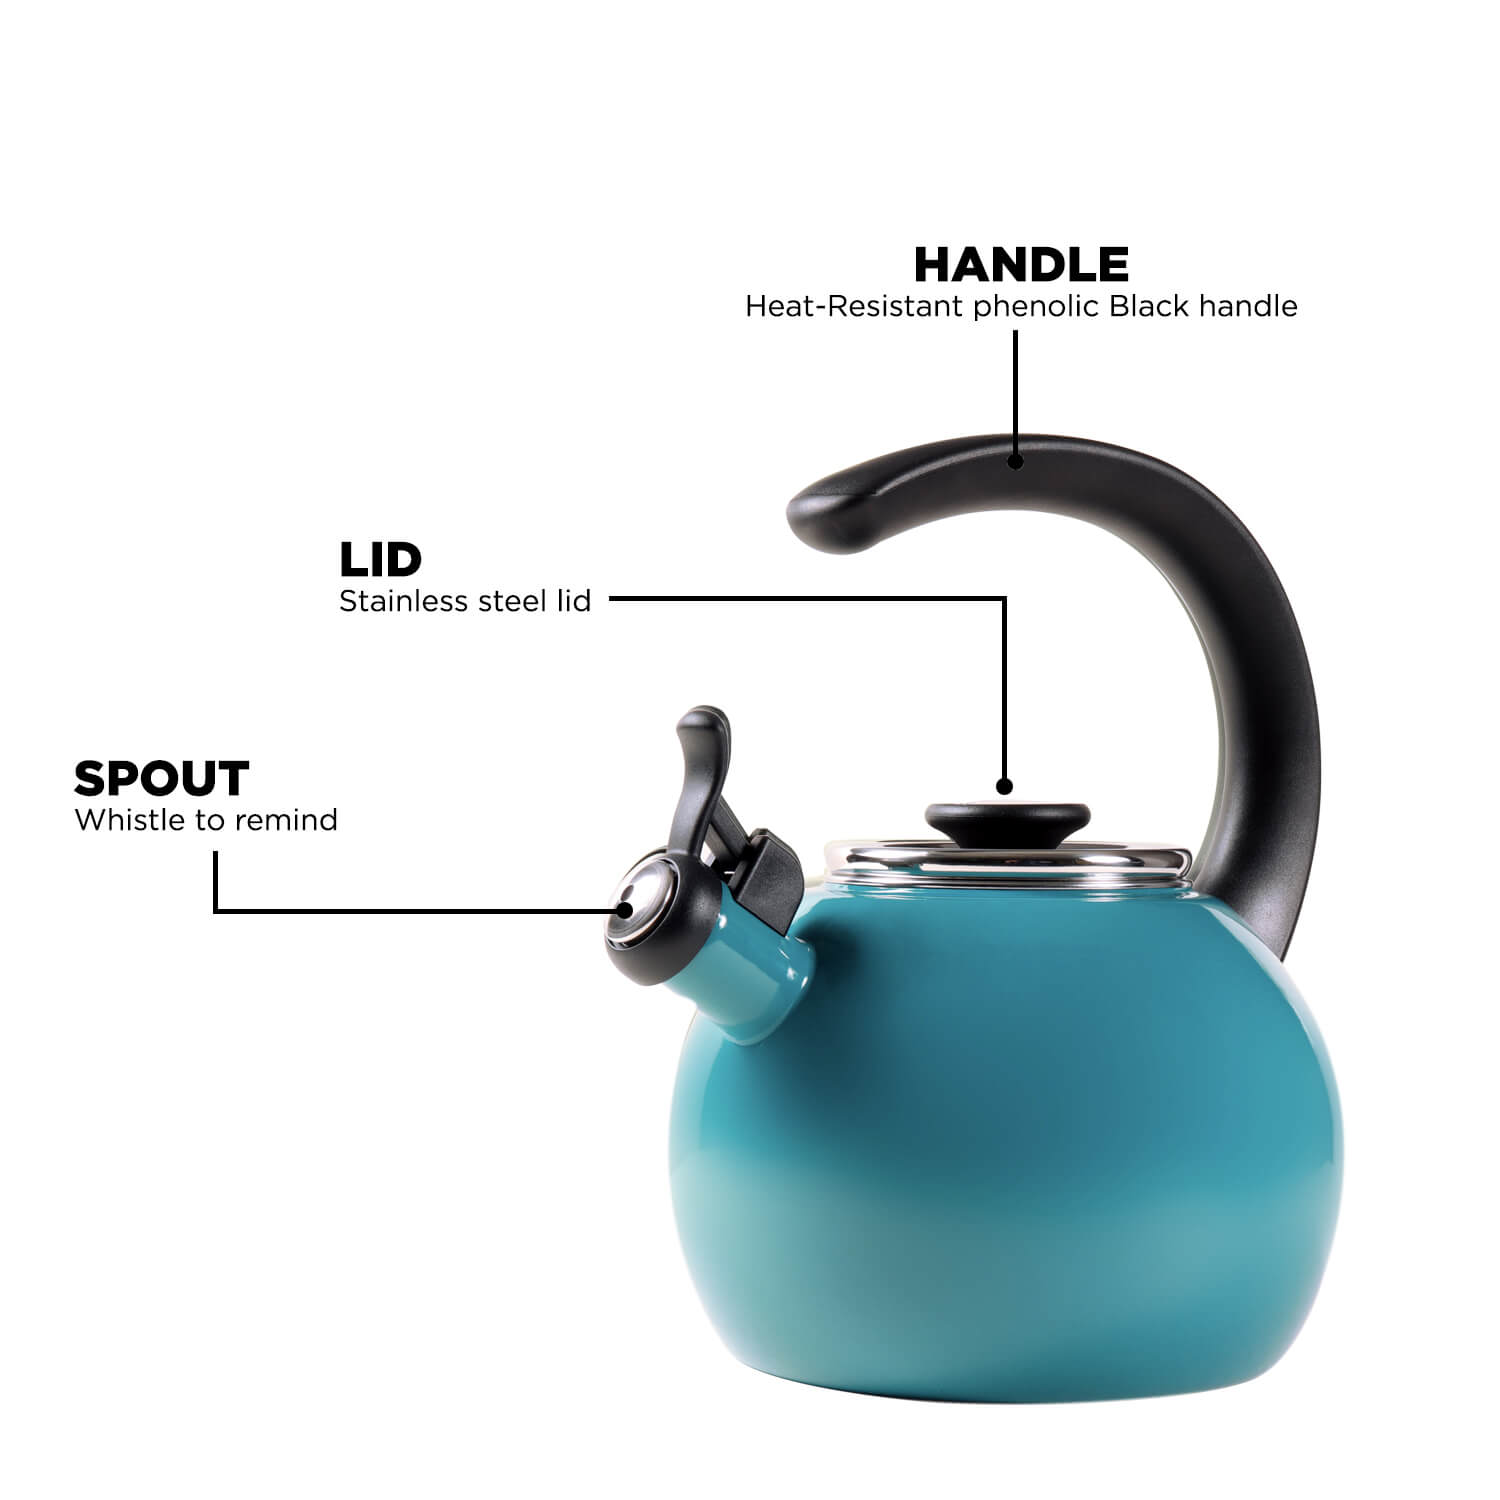 Circulon Enamel On Steel Whistling Tea Kettle 1.9 Liters, Turquoise